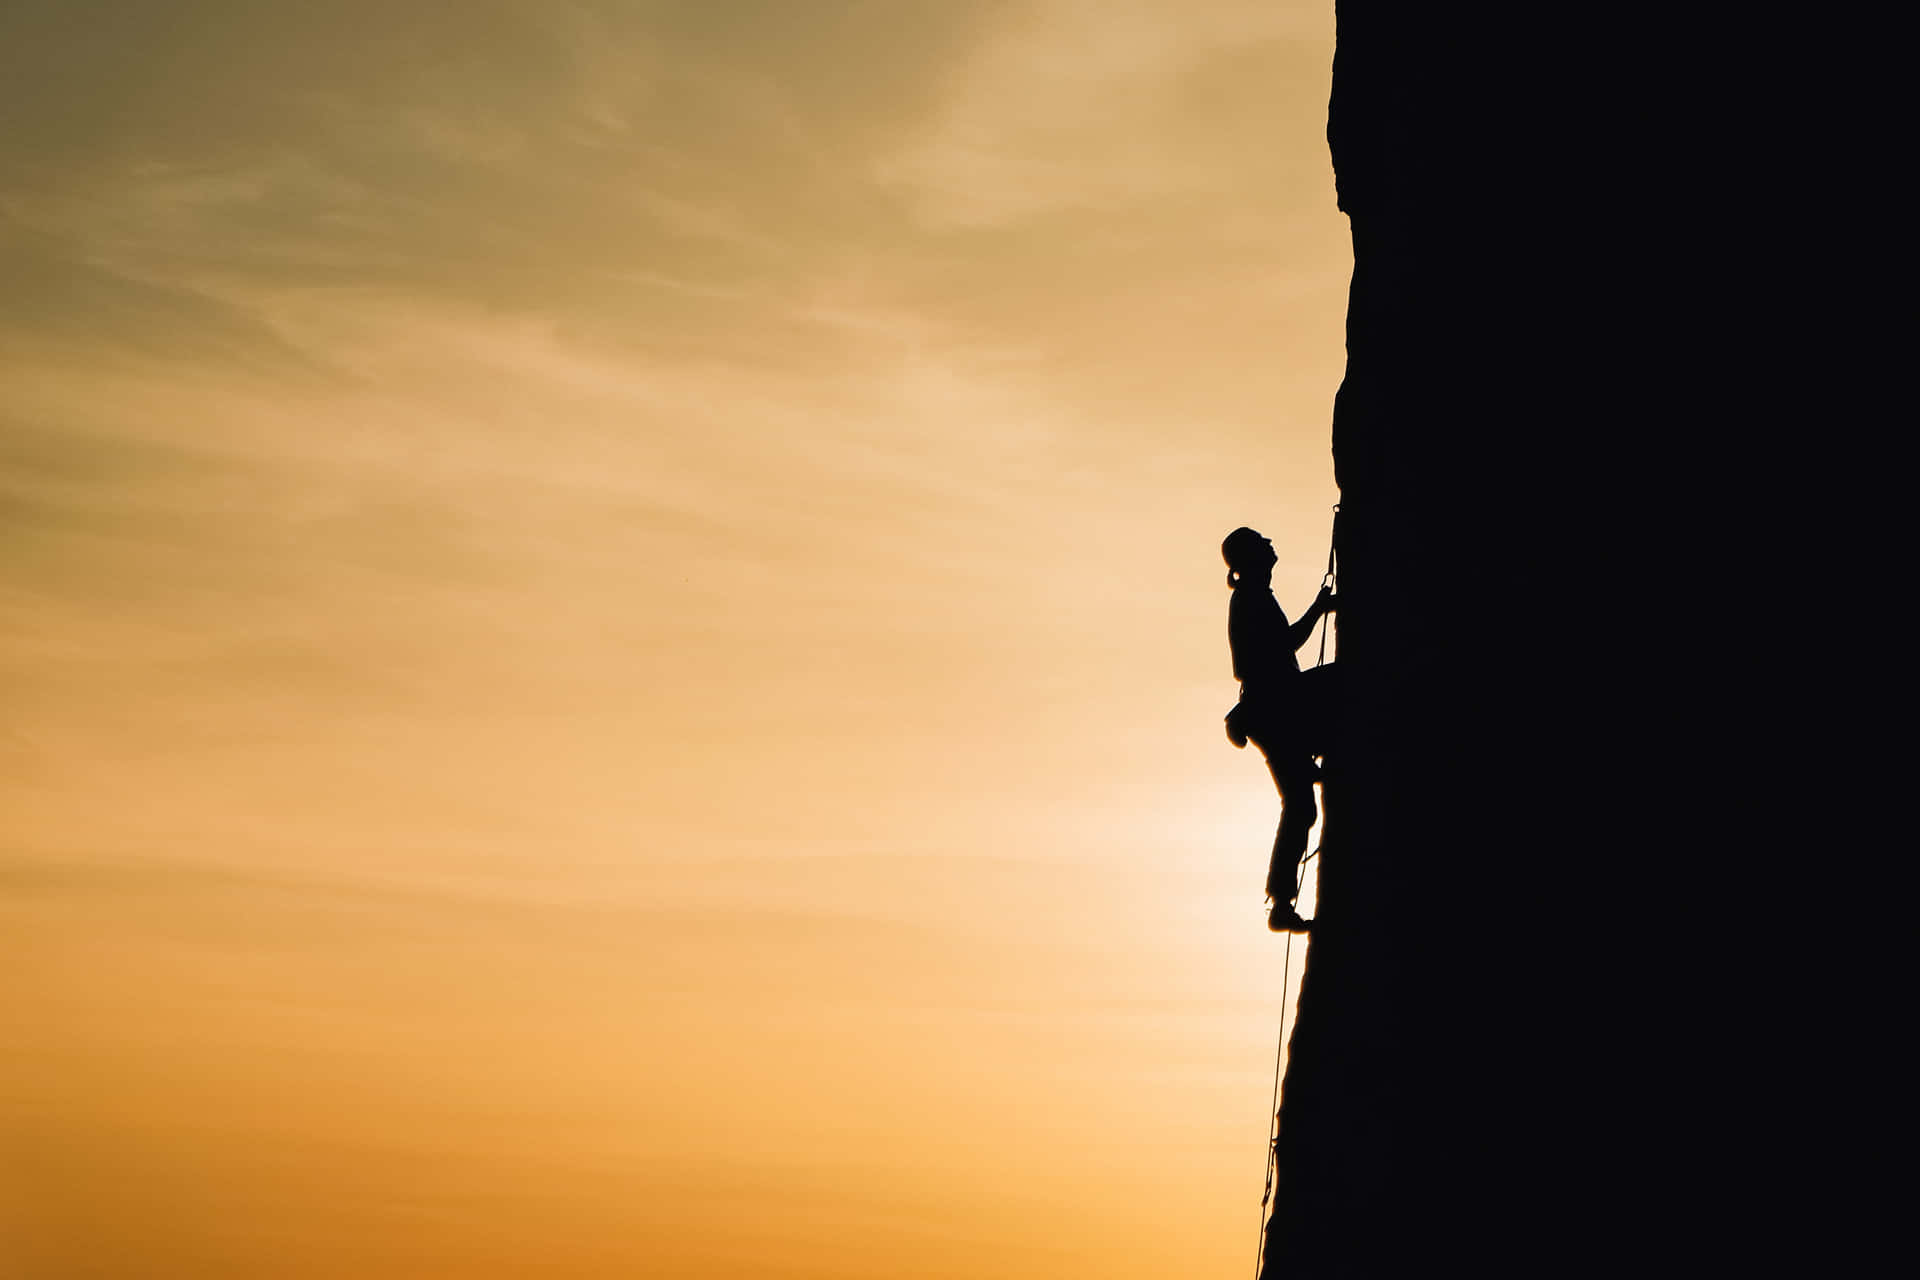 Silhouette Of A Climber Climbing A Rock At Sunset